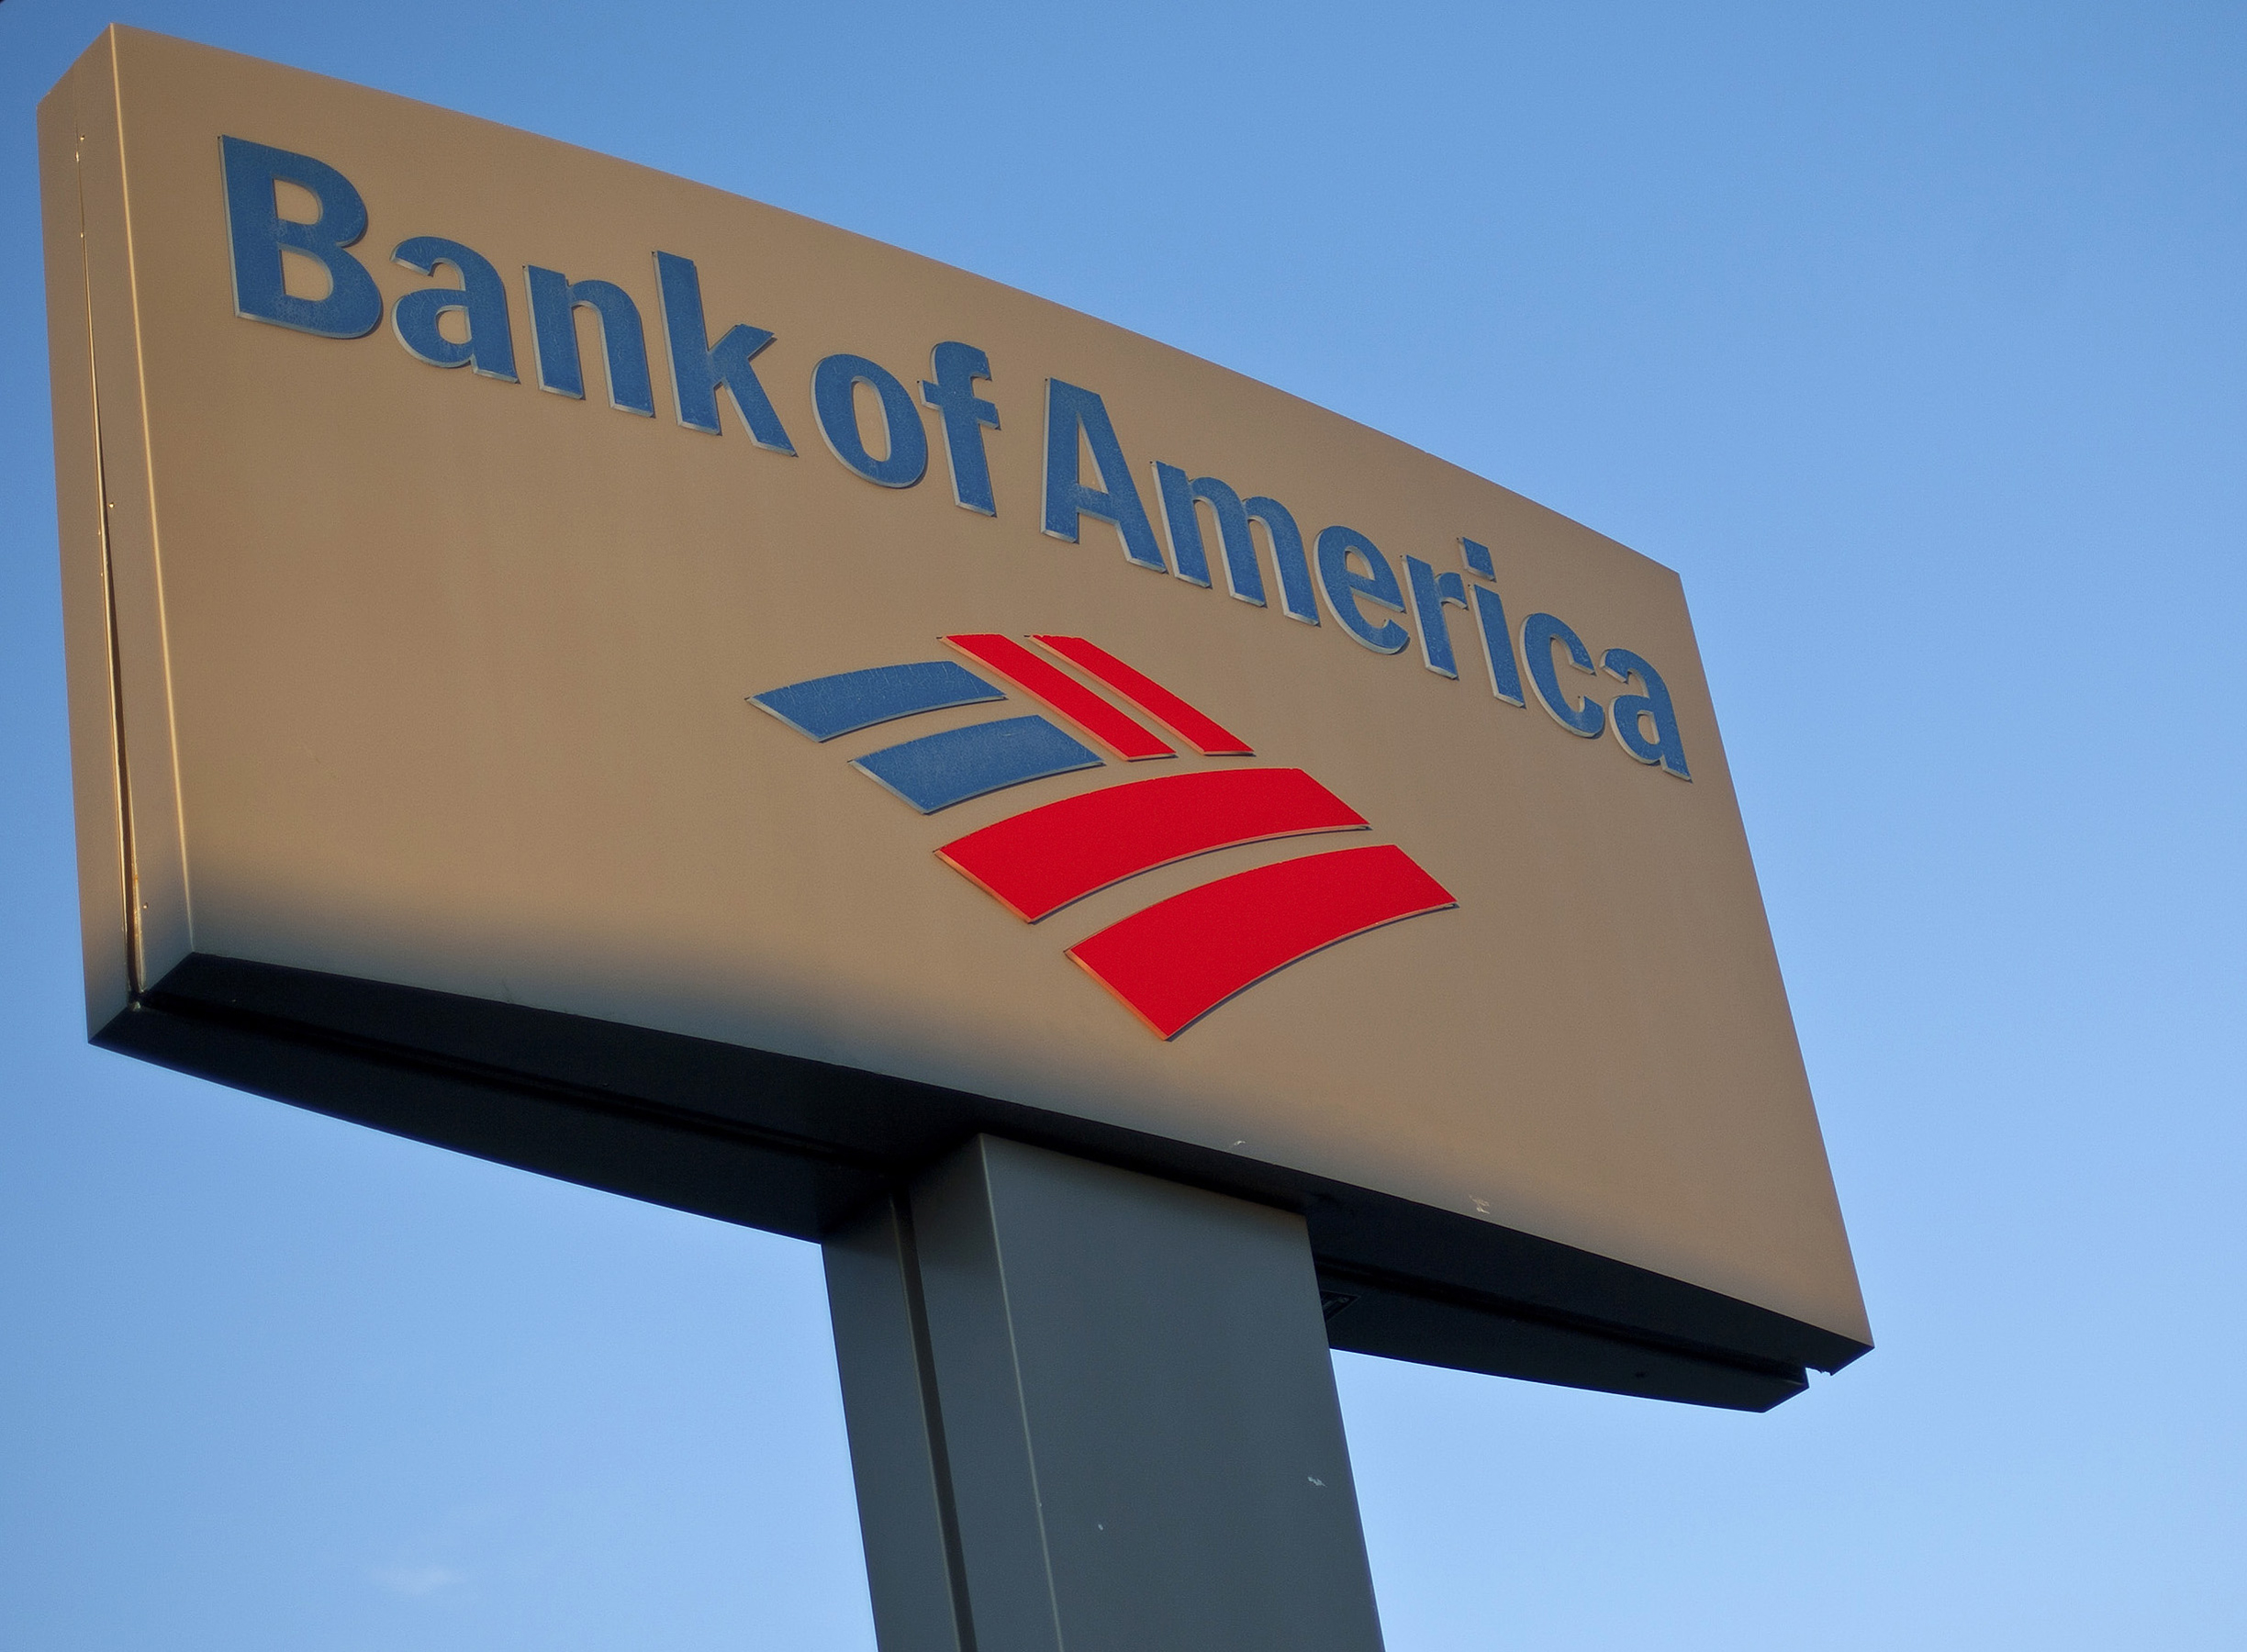 Бэнк оф сайт. Bank of America. Bank of America презентация. Самый современный банк США. Bank of America Merrill Lynch симуляция.